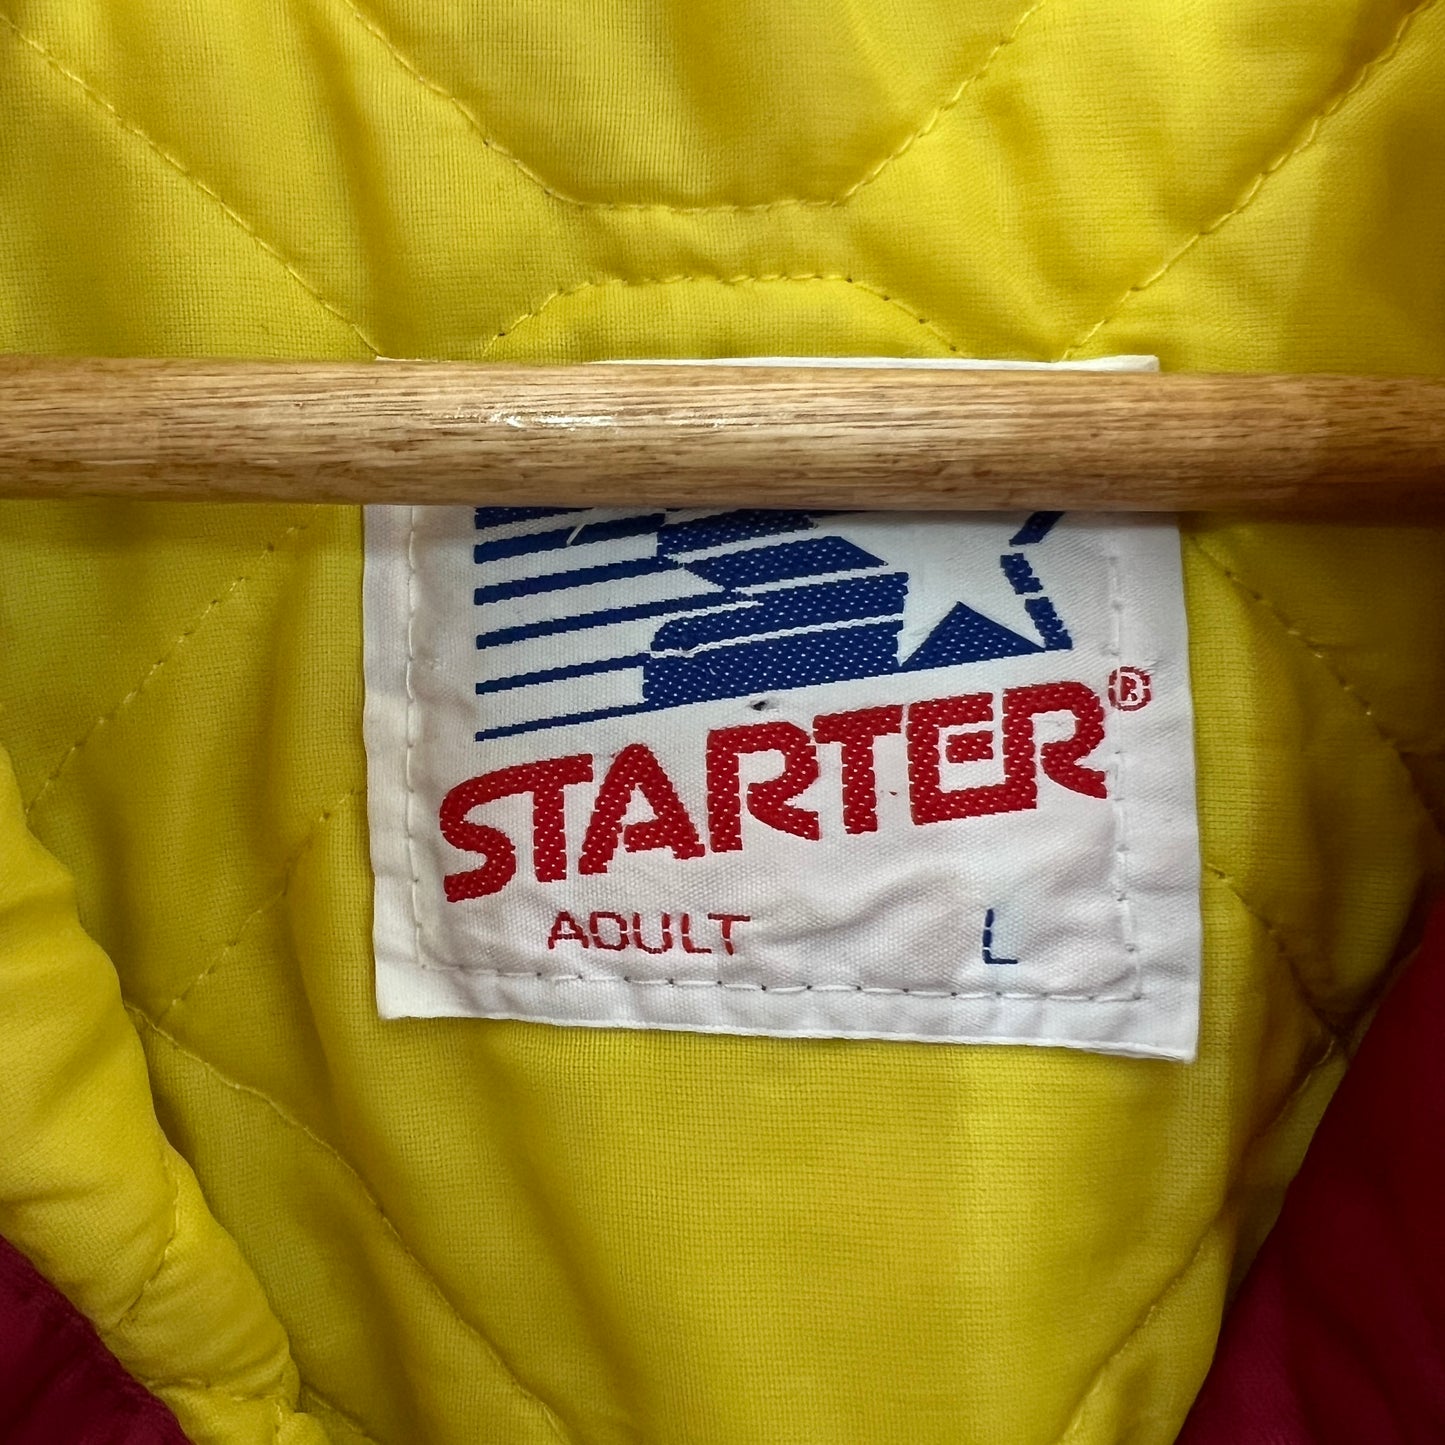 Minnesota Golden Gophers Starter Jacket